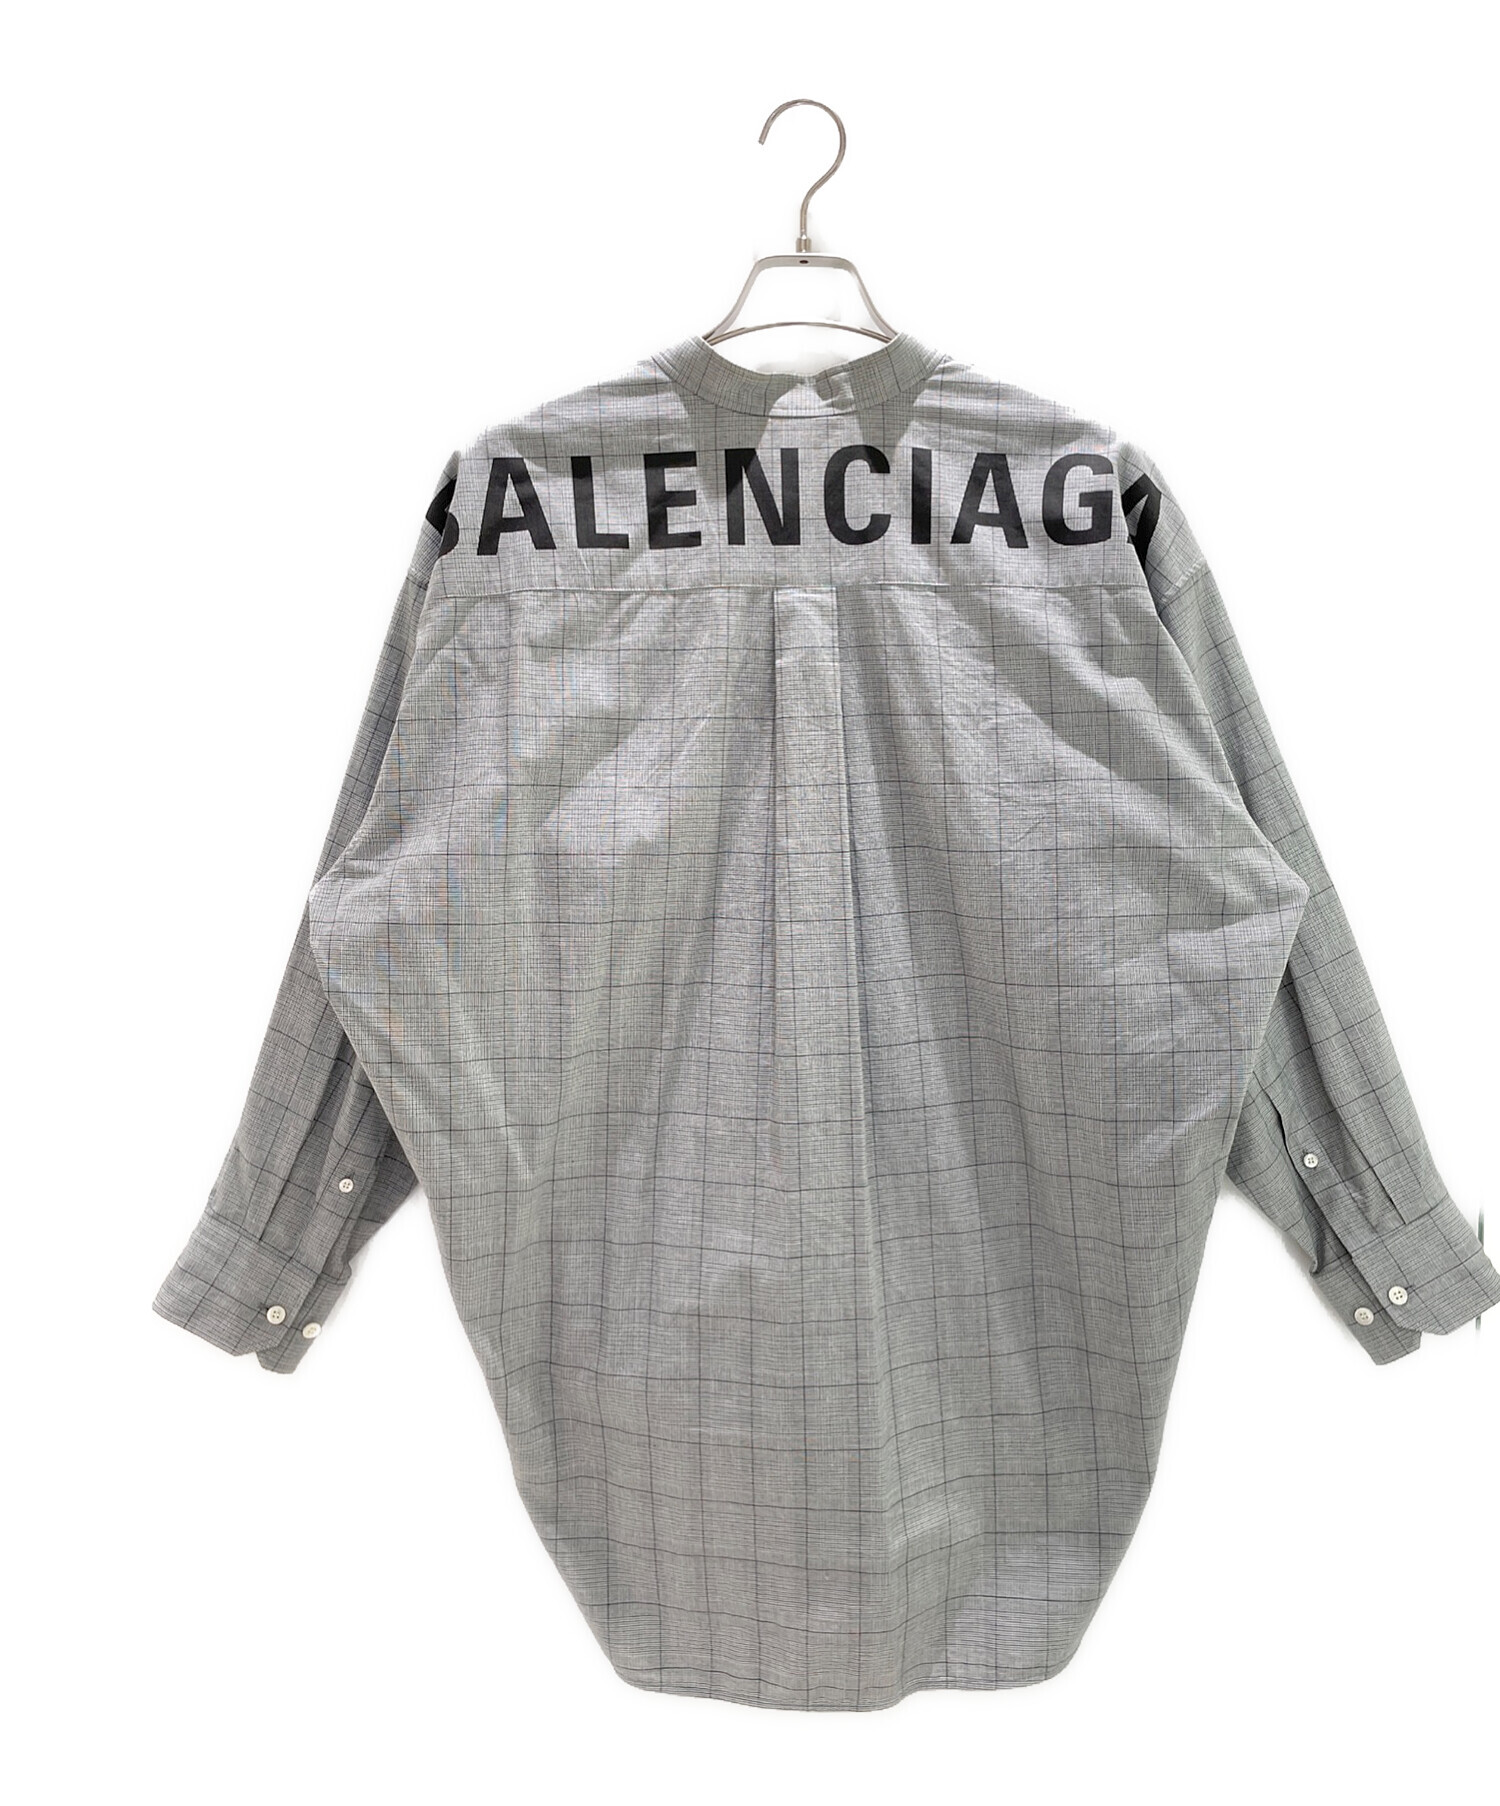 BALENCIAGA (バレンシアガ) ニュースウィングシャツ ライトグレー サイズ:34